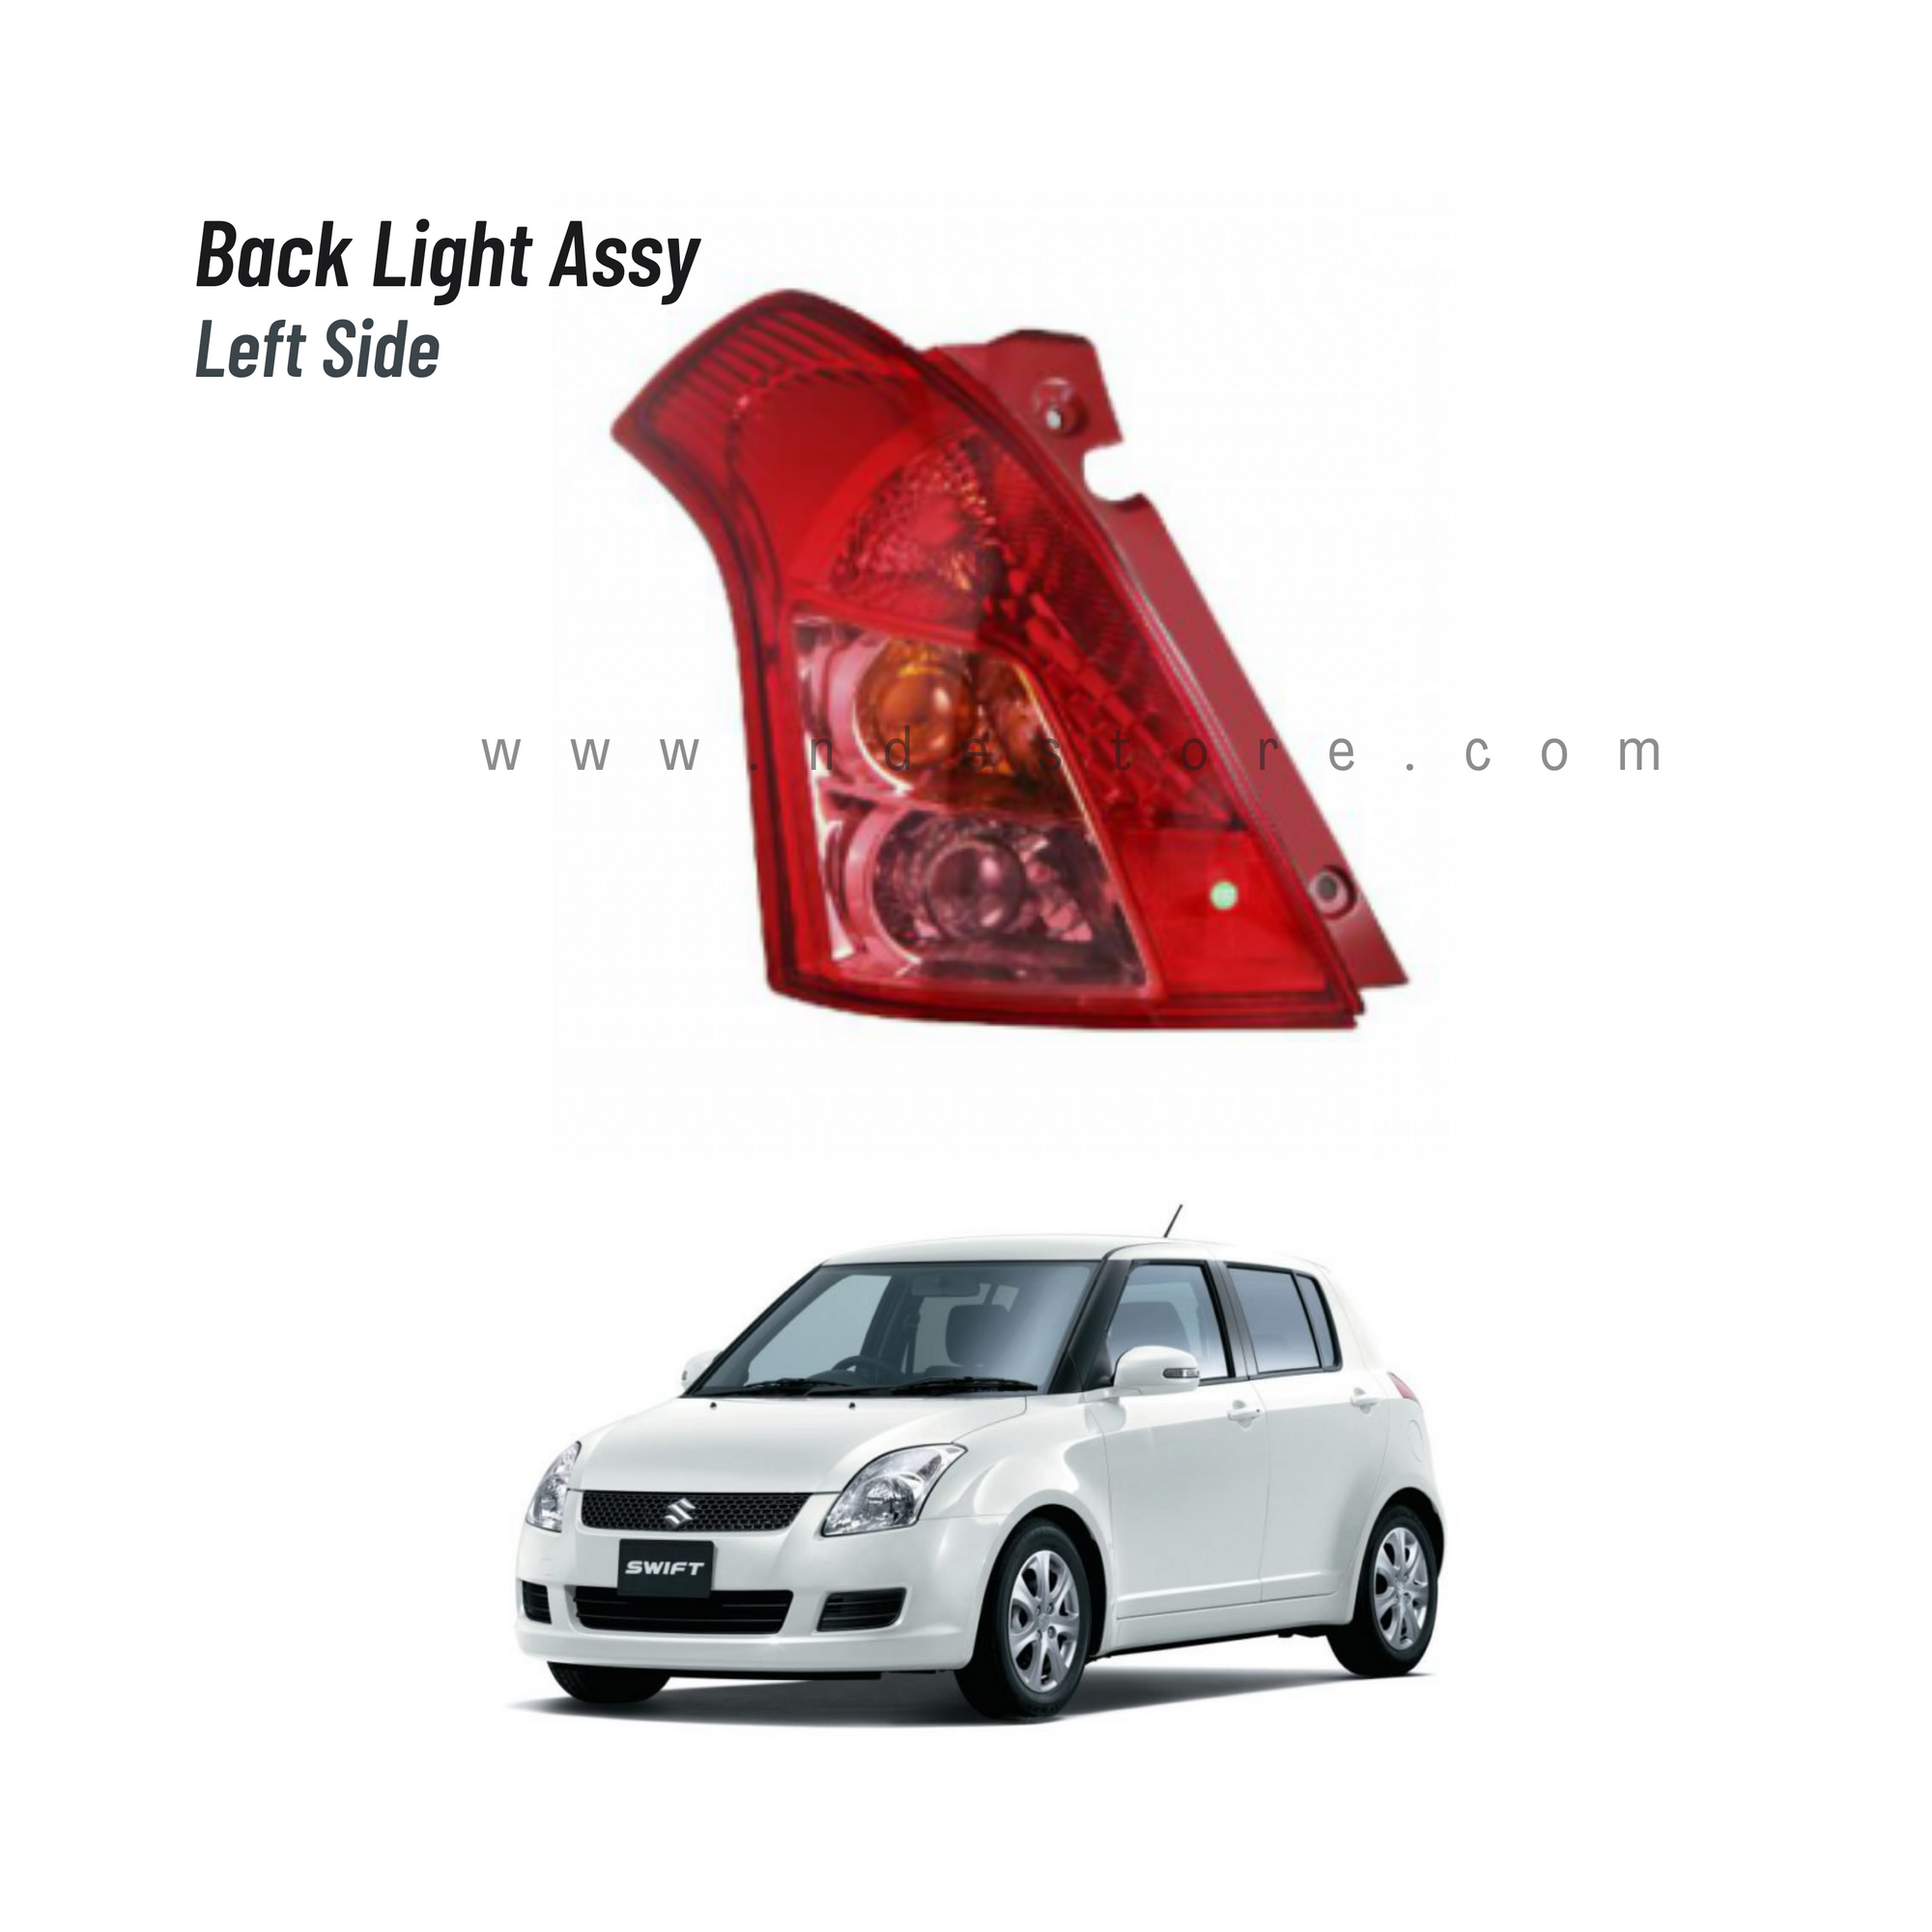 BACK LIGHT ASSY GENUINE FOR SUZUKI SWIFT (2008-2021)